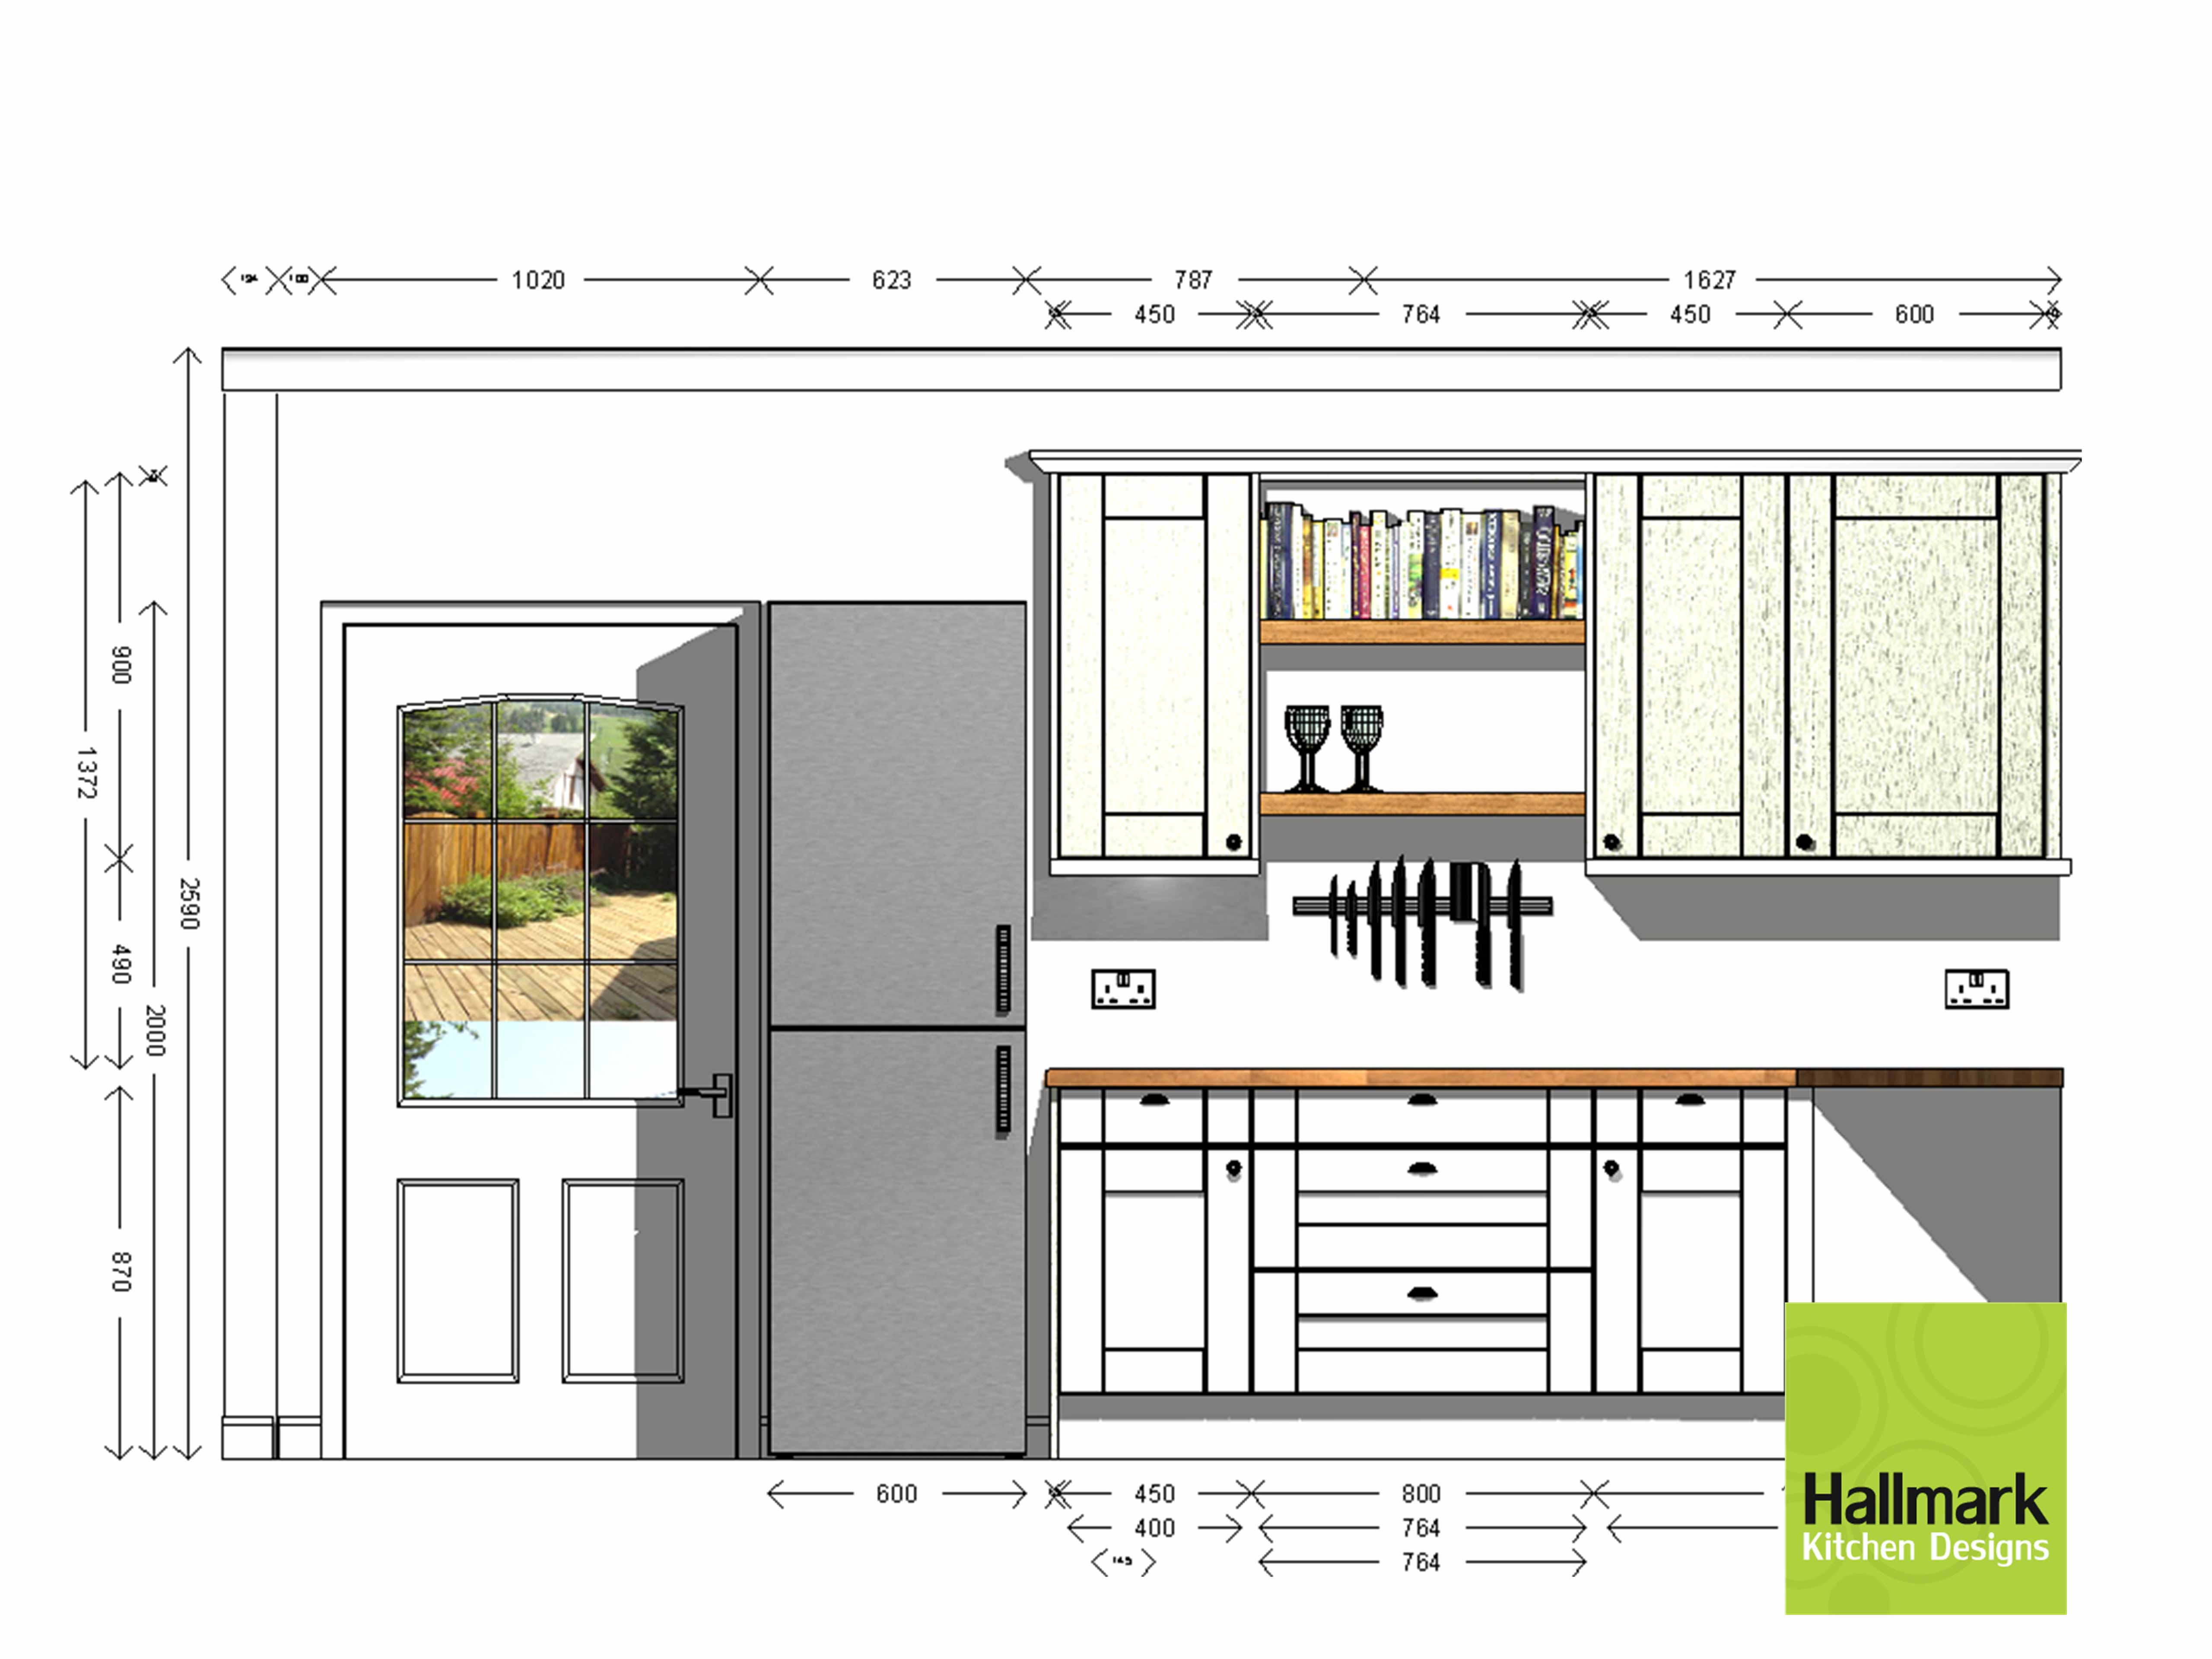 Kitchen Design Elevation - Kitchens Design, Ideas And Renovation